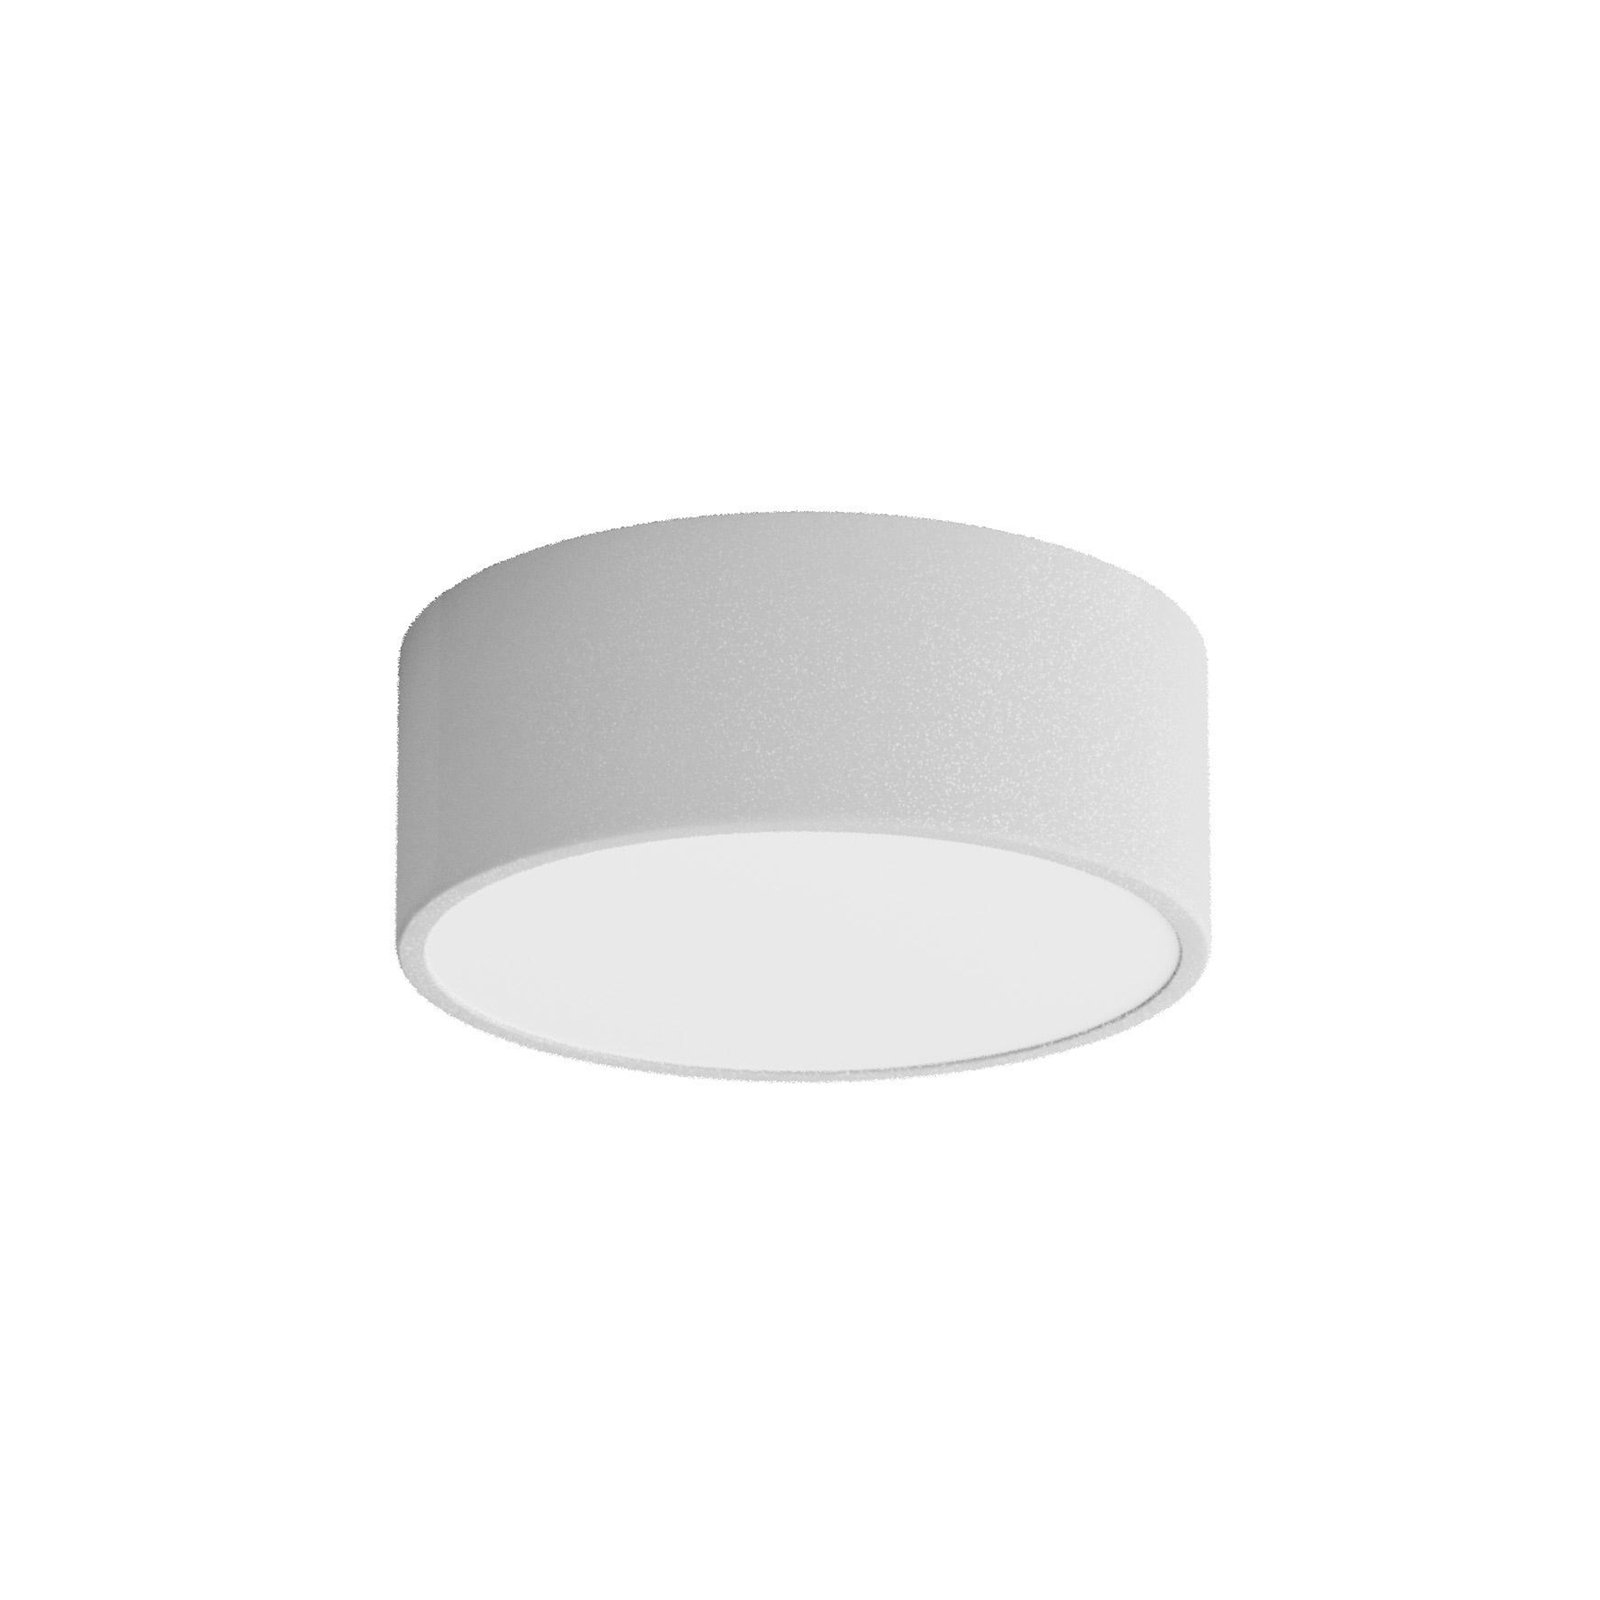 Cleo ceiling light, grey, Ø 20 cm, metal, IP54